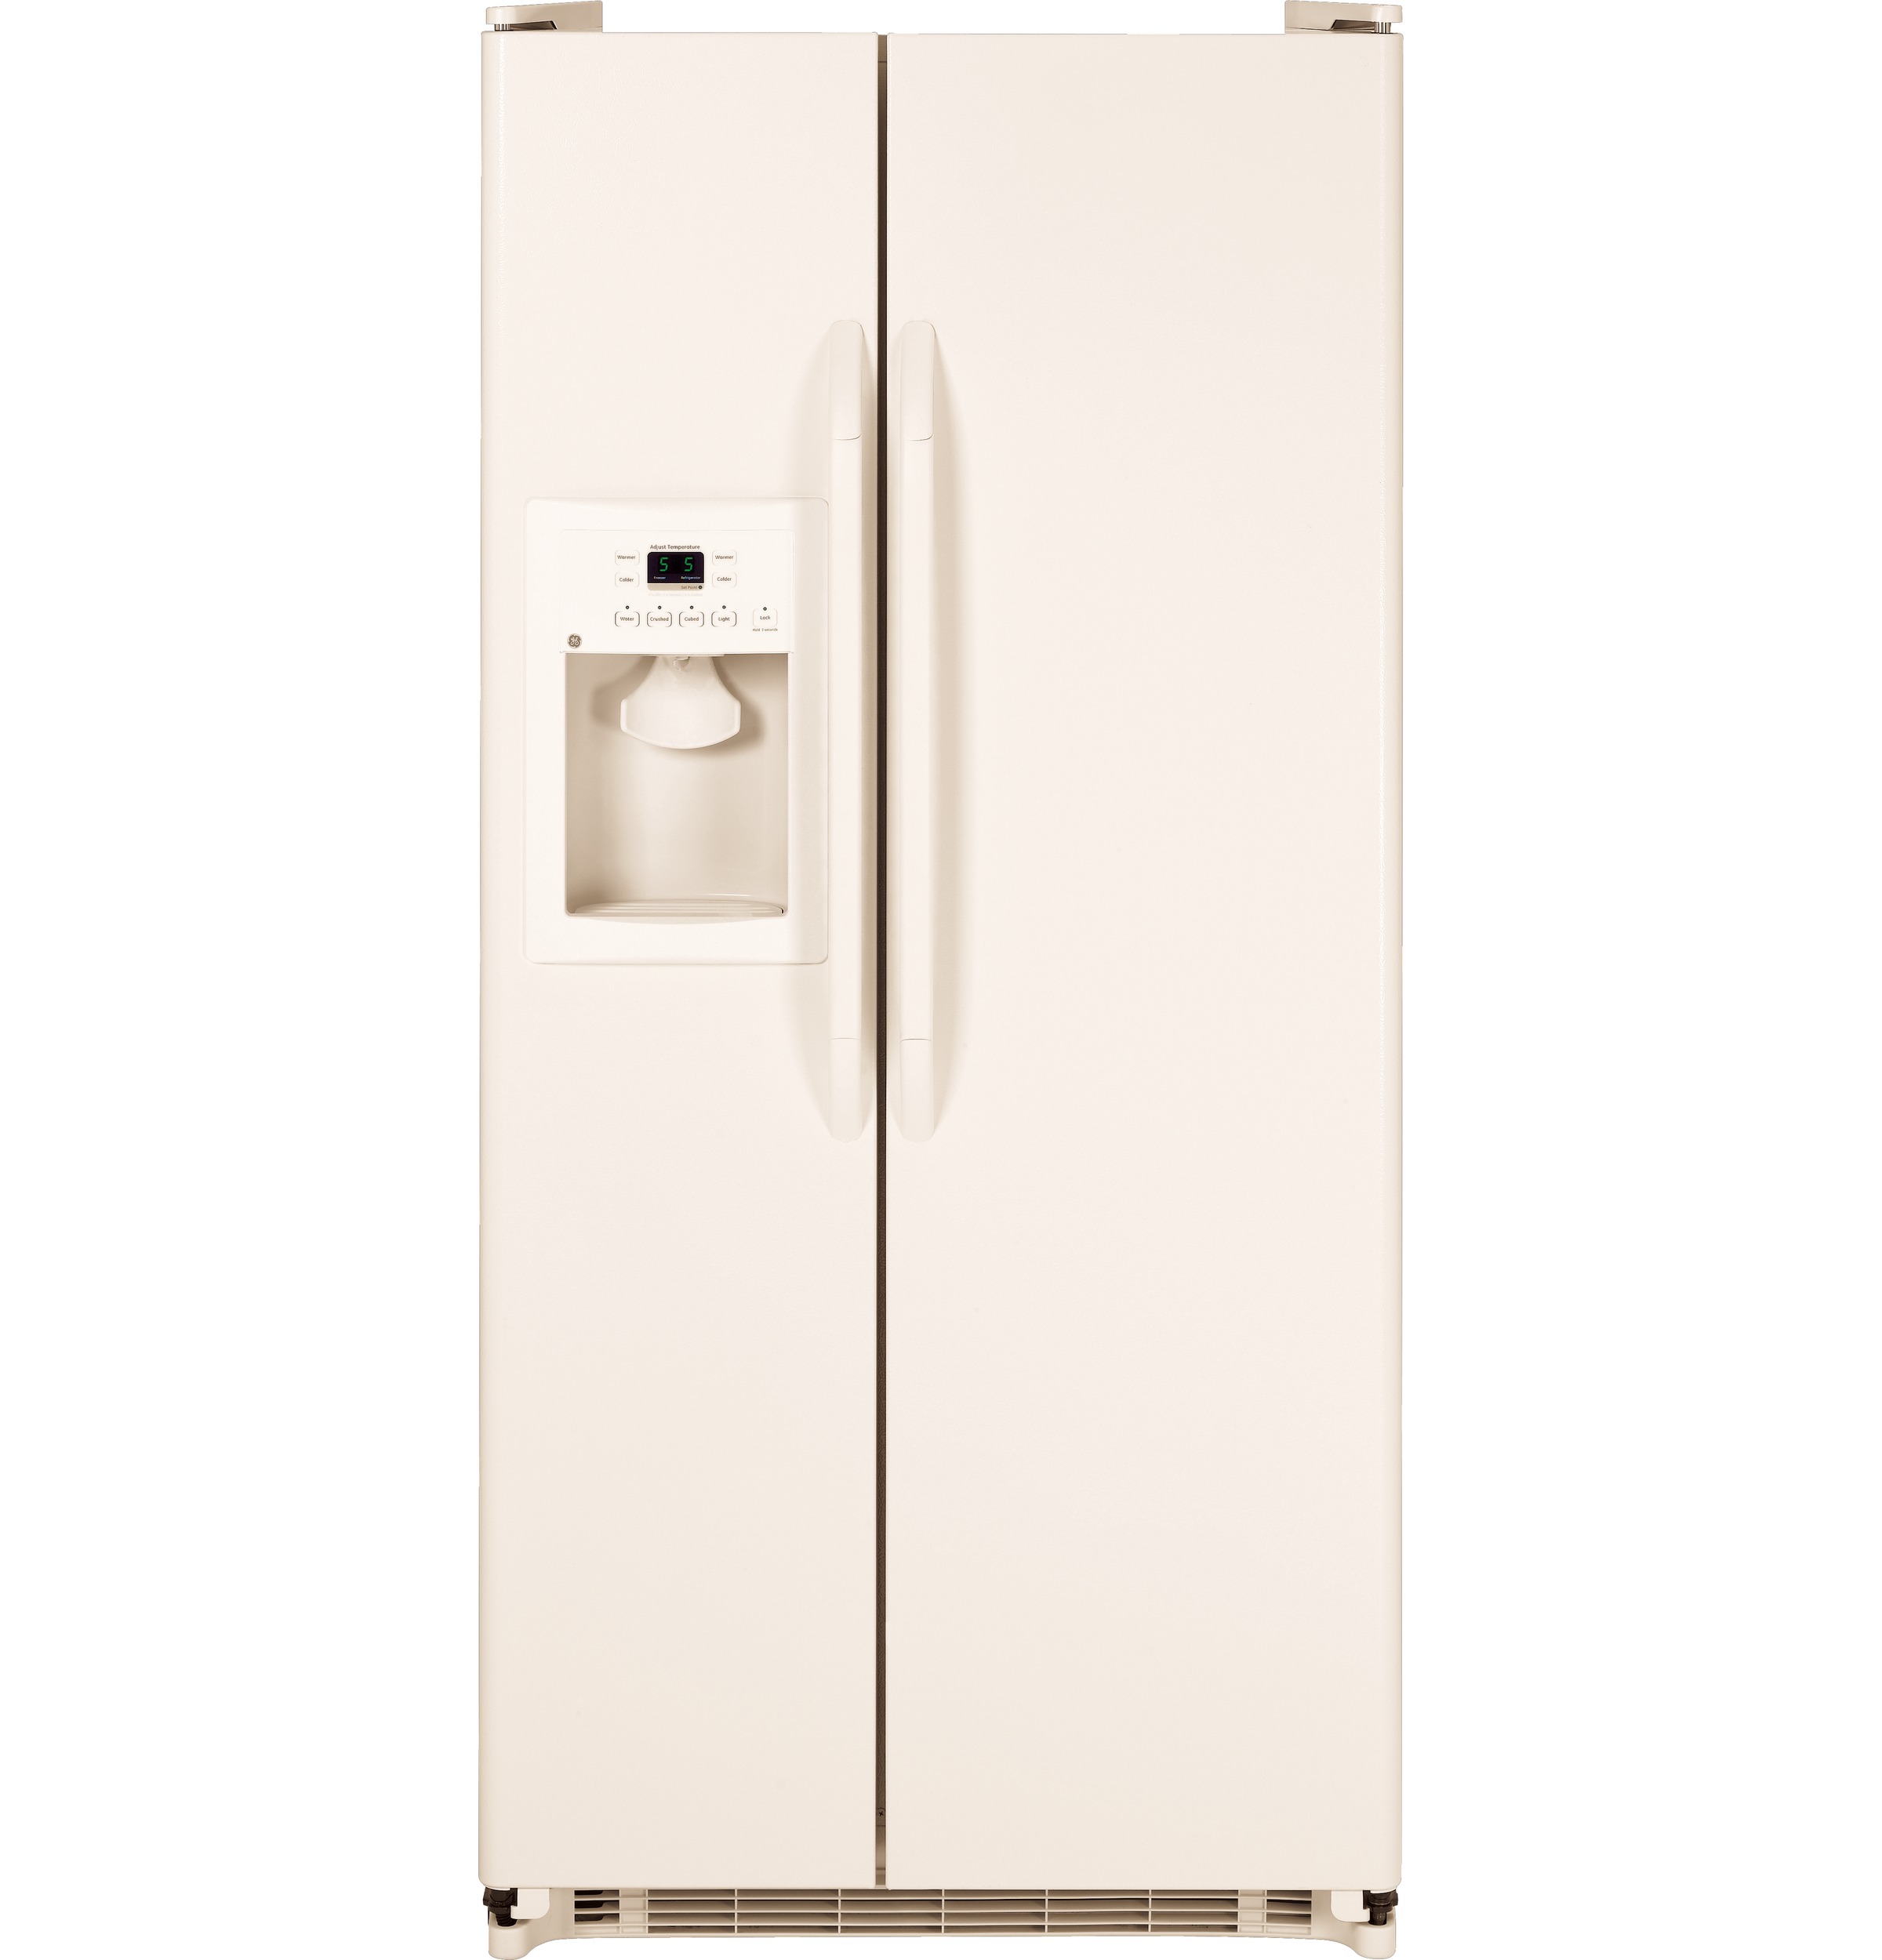 GE® 20.0 Cu. Ft. Side-By-Side Refrigerator